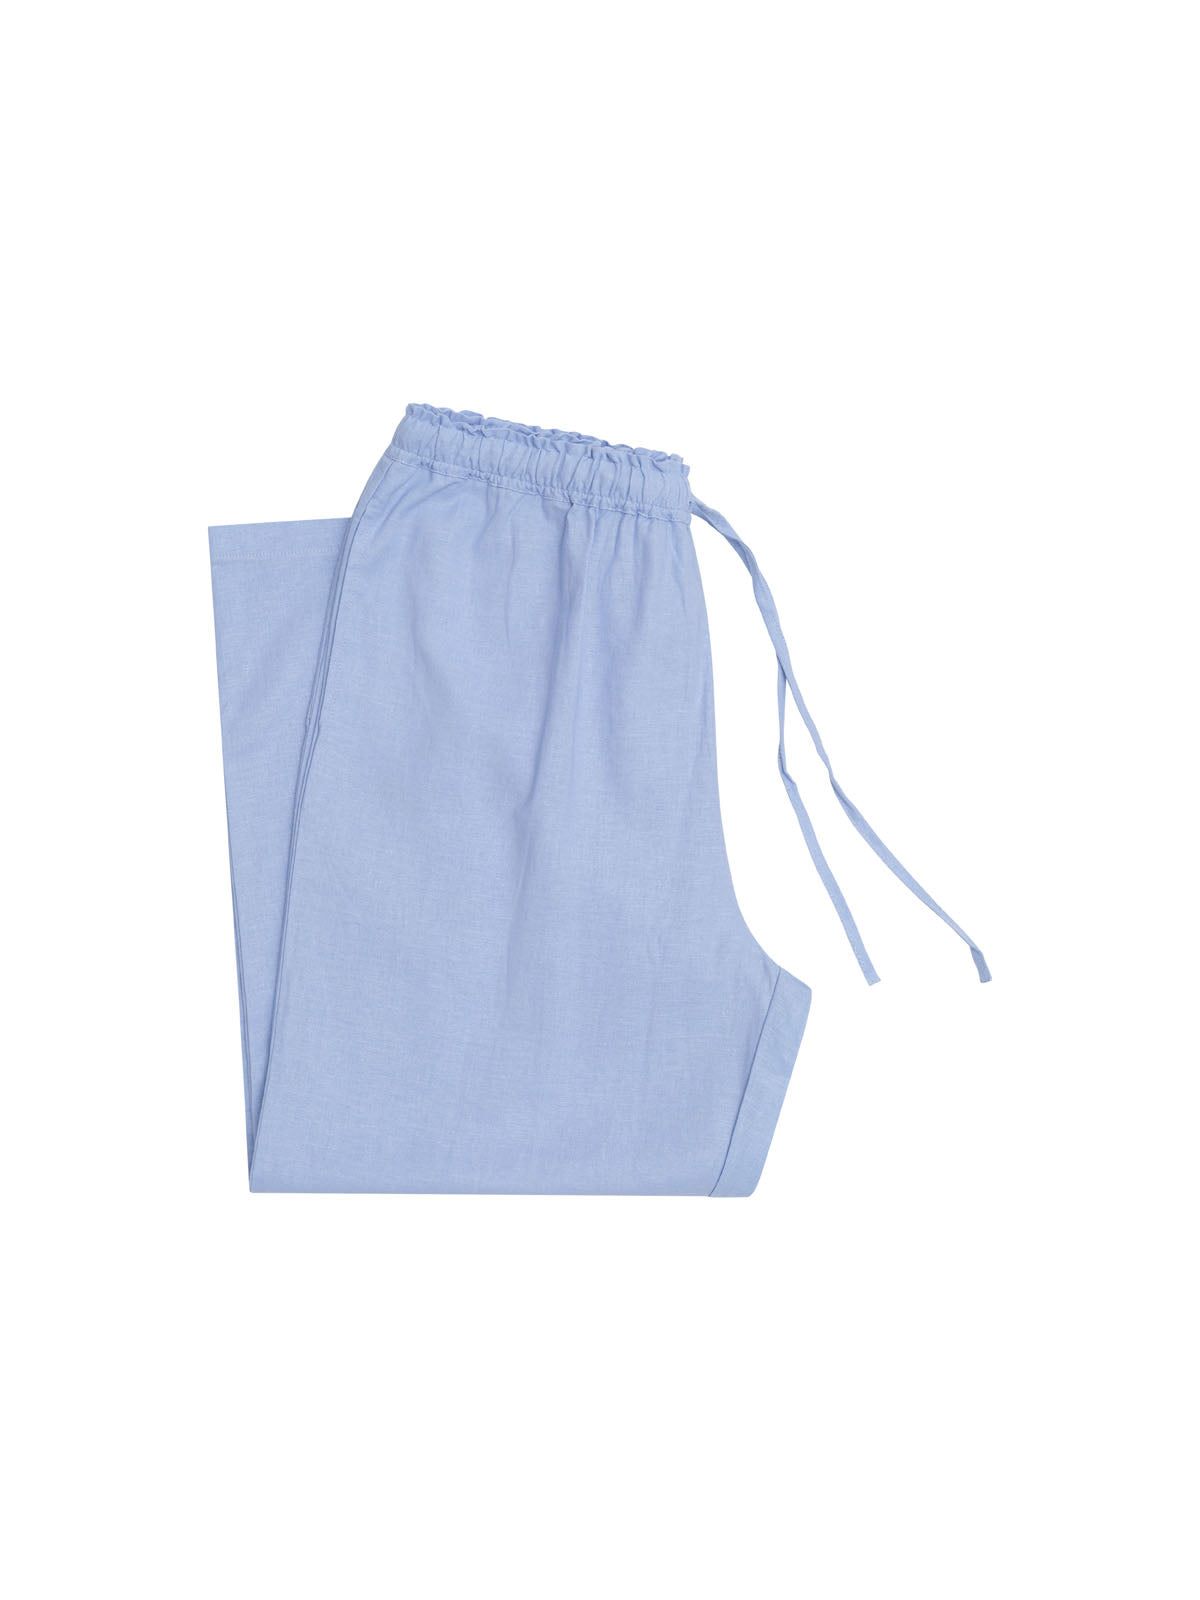 Women's Cornflower Summer Dreaming Linen Pyjama Set with 7/8 Pant | Magnolia Lounge